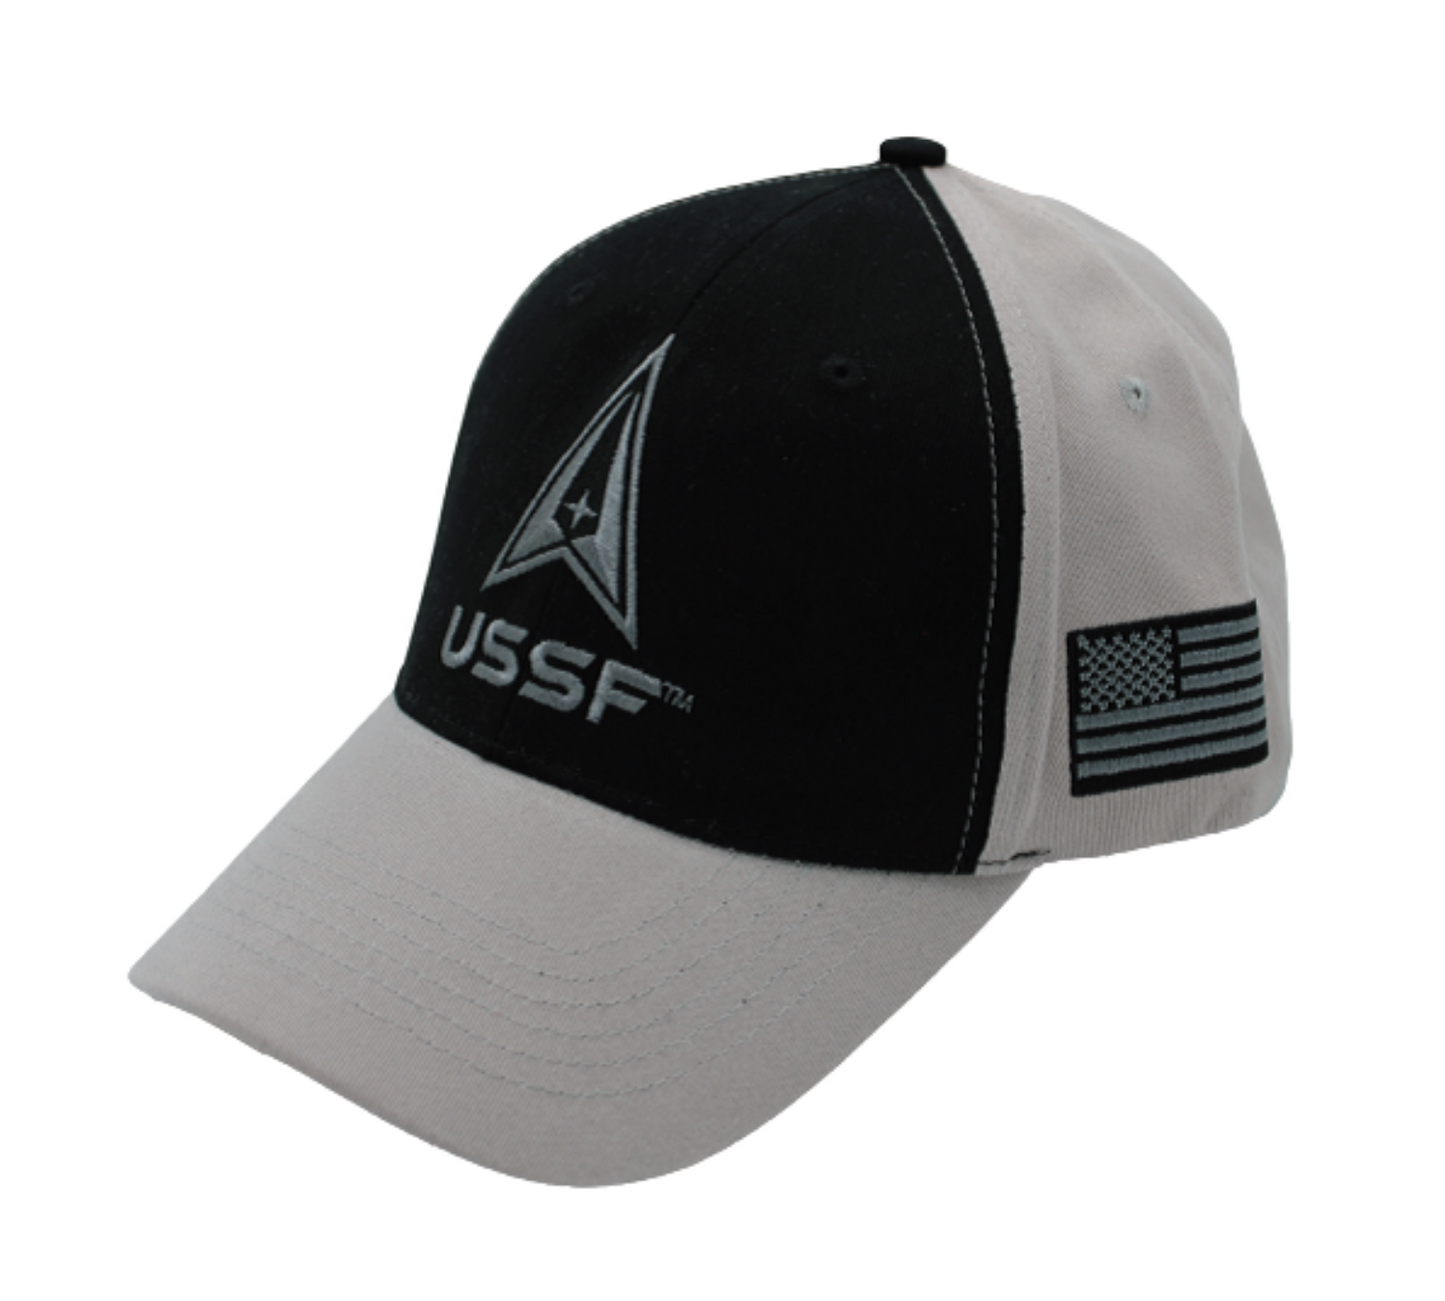 U.S. Space Force Logo Hat